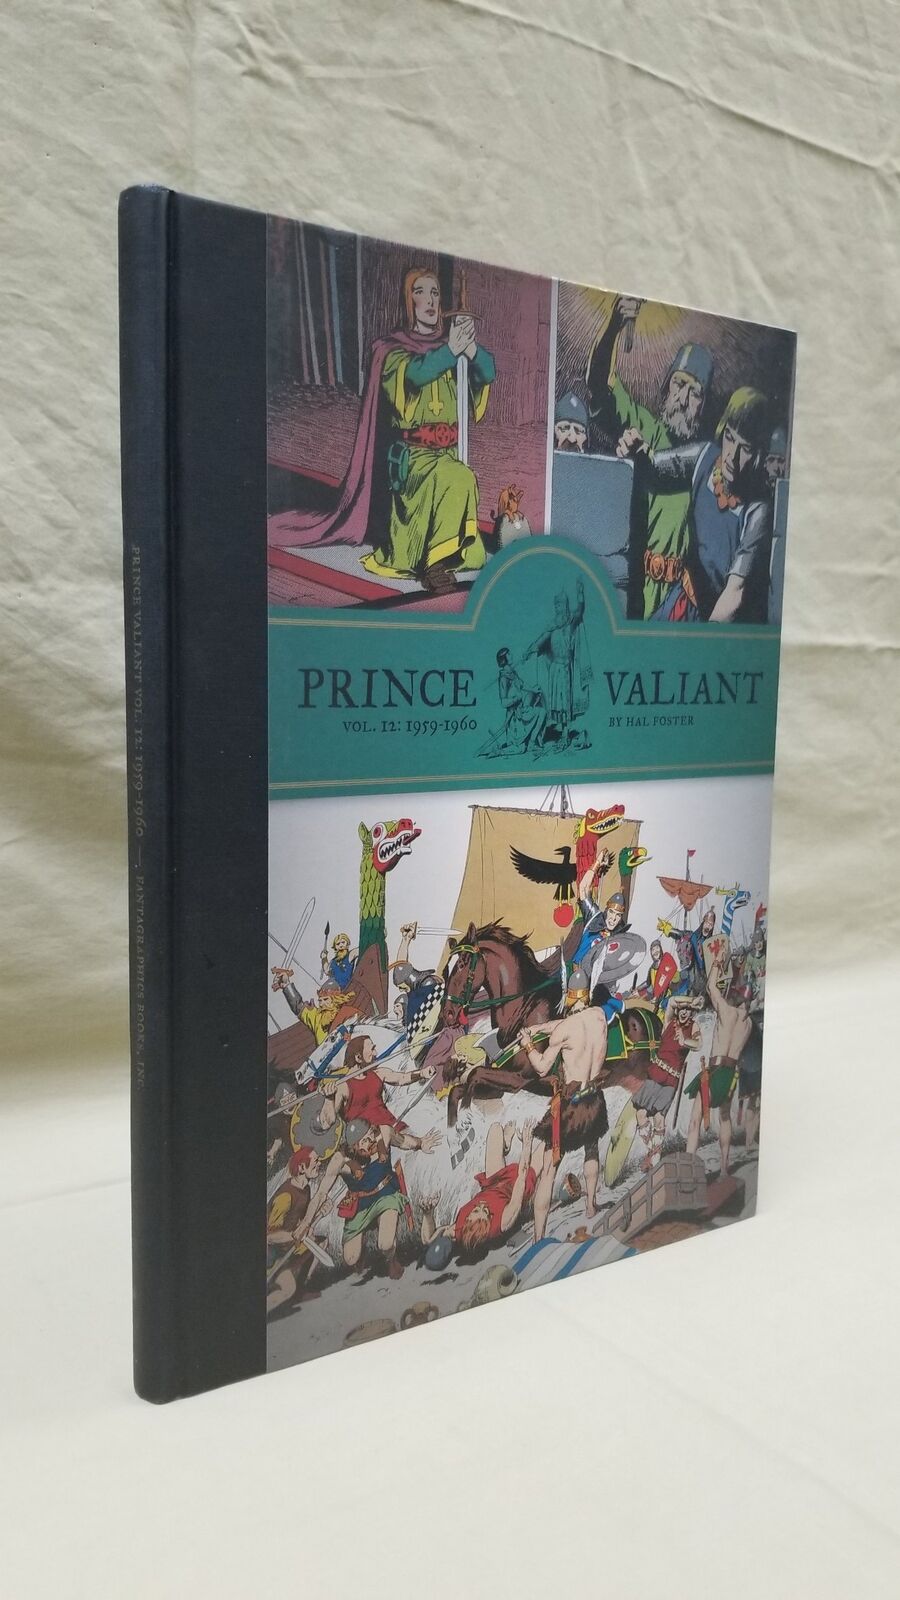 Prince Valiant #12 (Fantagraphics Books December 2015) HAL FOSTER HARDCOVER